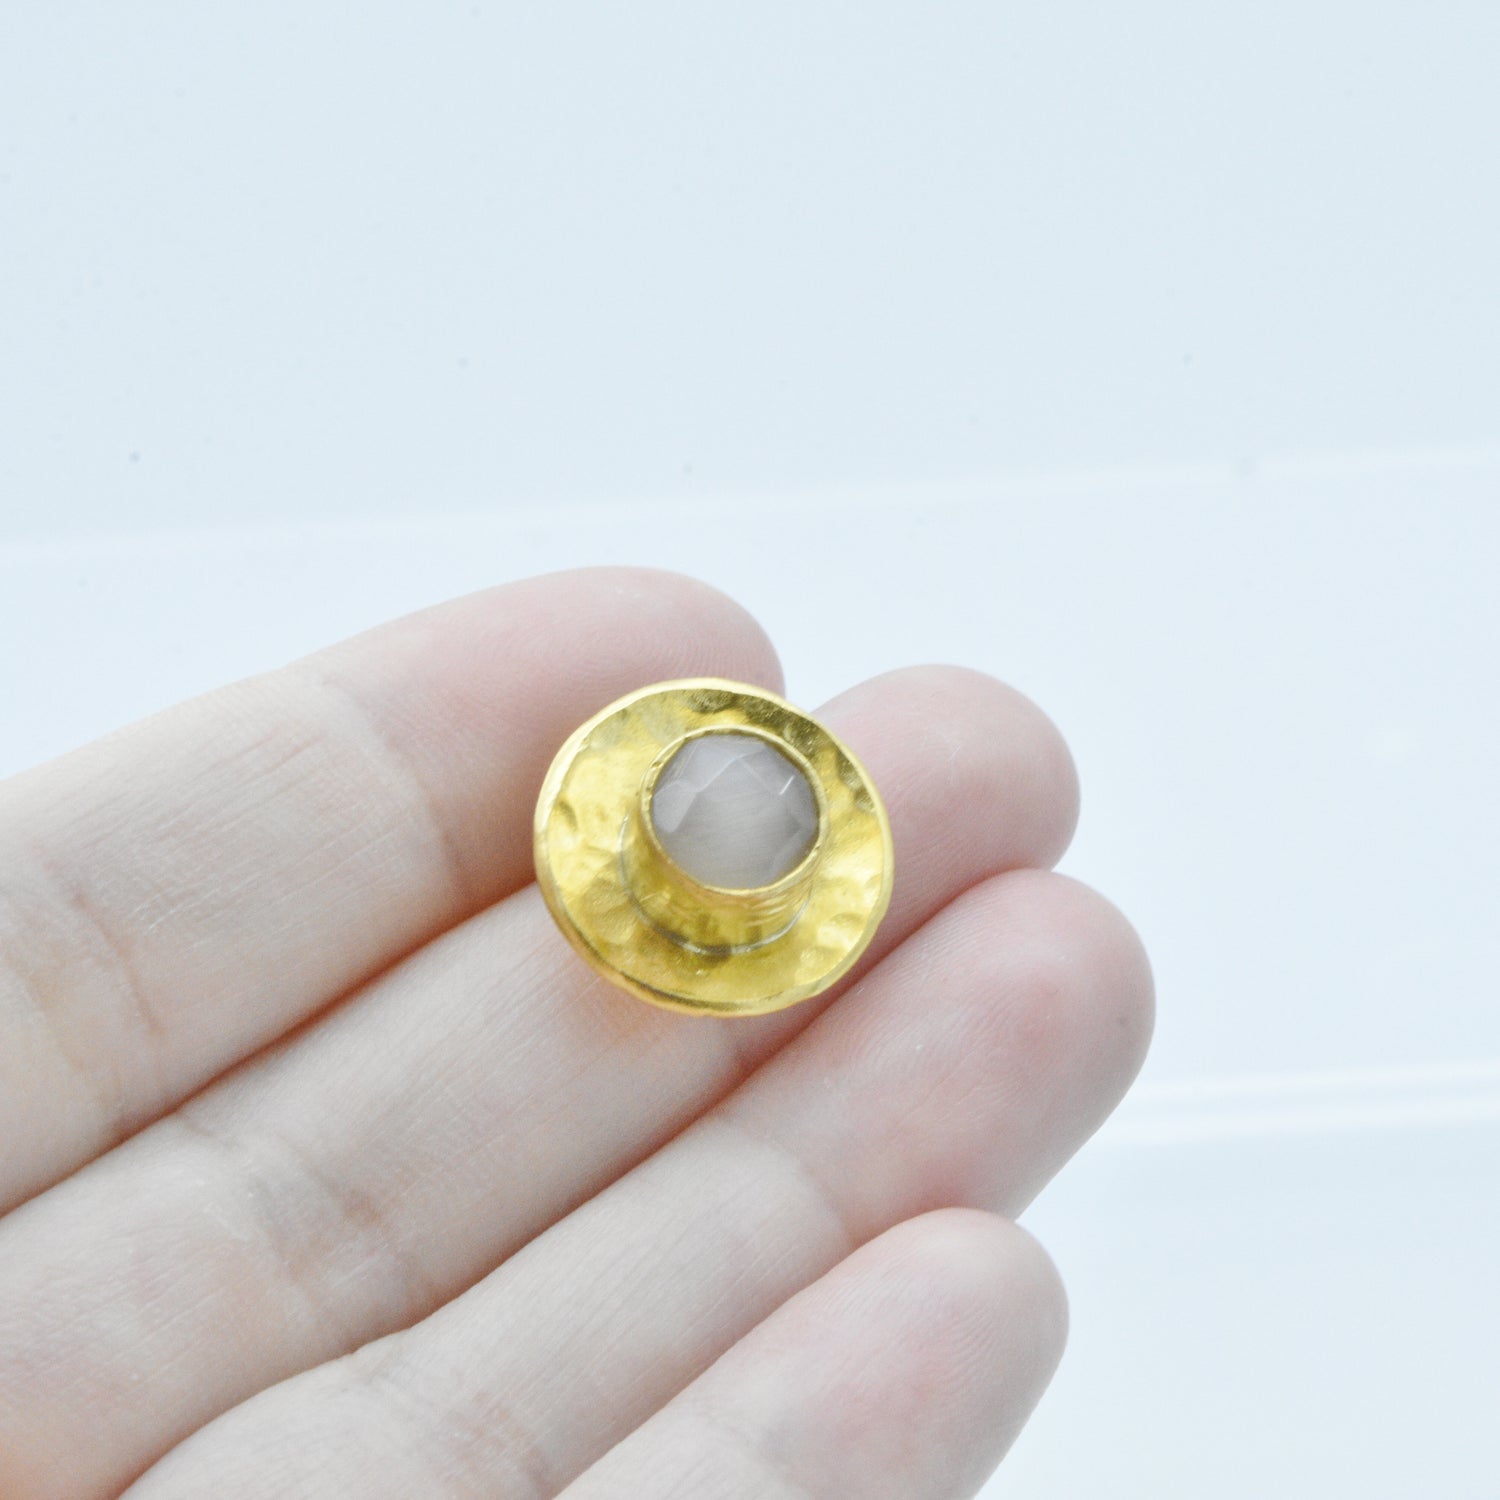 Aylas Cateye earrings - 21ct Gold plated semi precious gemstone - Handmade in Ottoman Style by Artisan